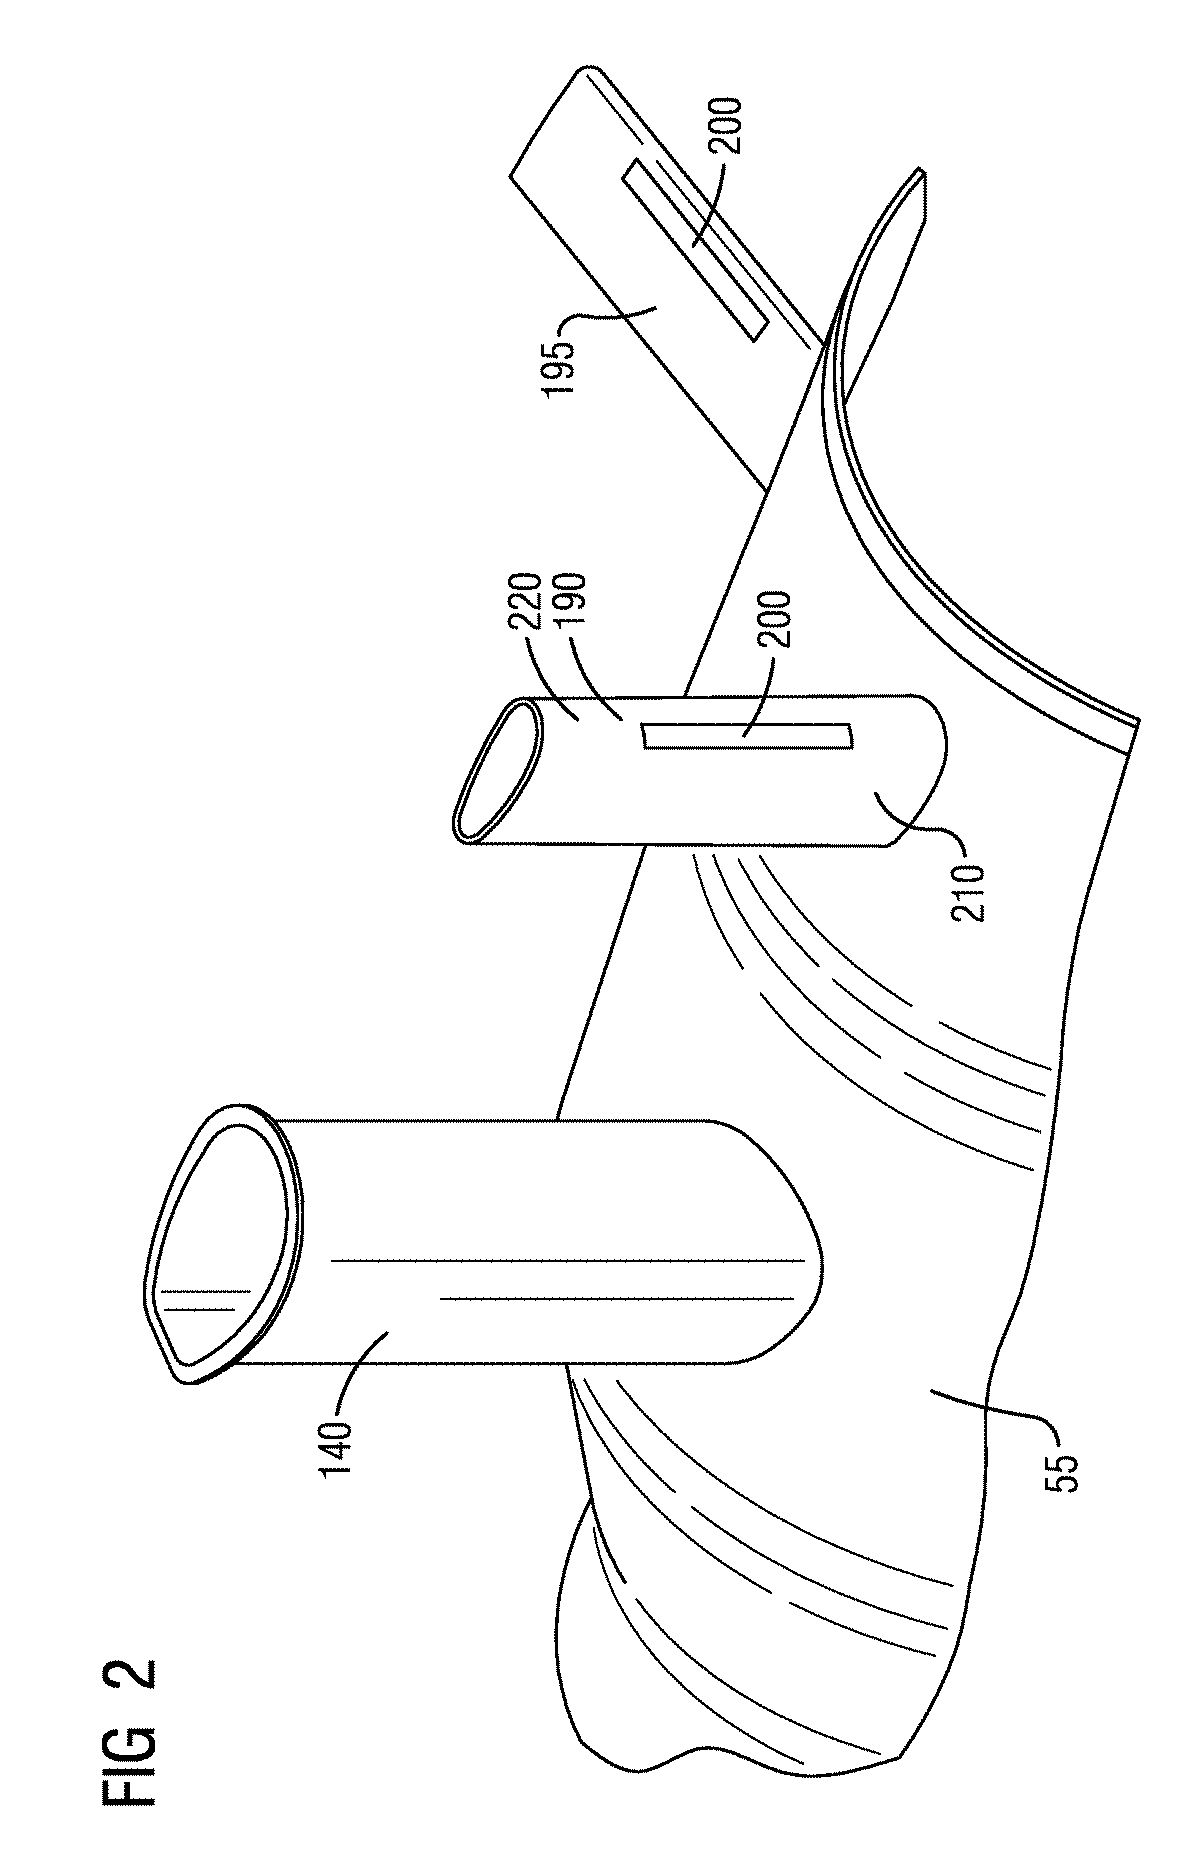 Turbine exhaust cylinder strut strip for shock induced oscillation control